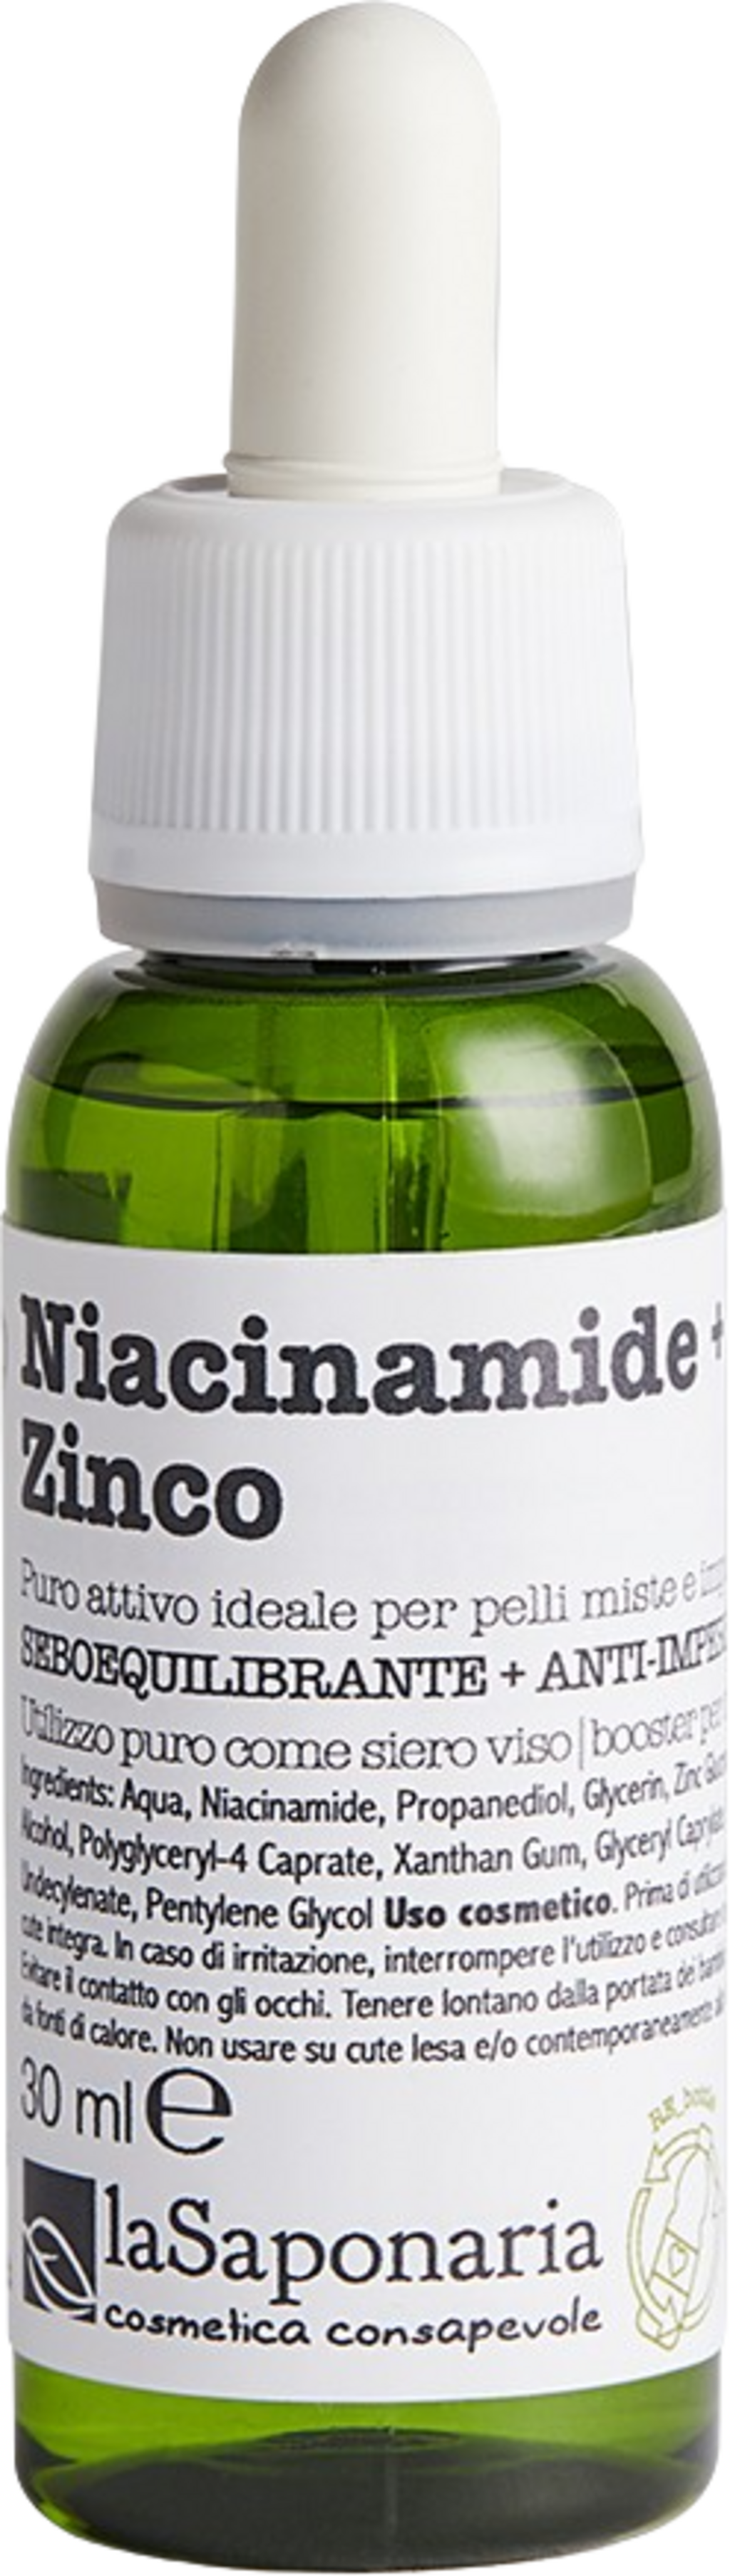 La Saponaria Niacinamide + Zinco - 30 ml